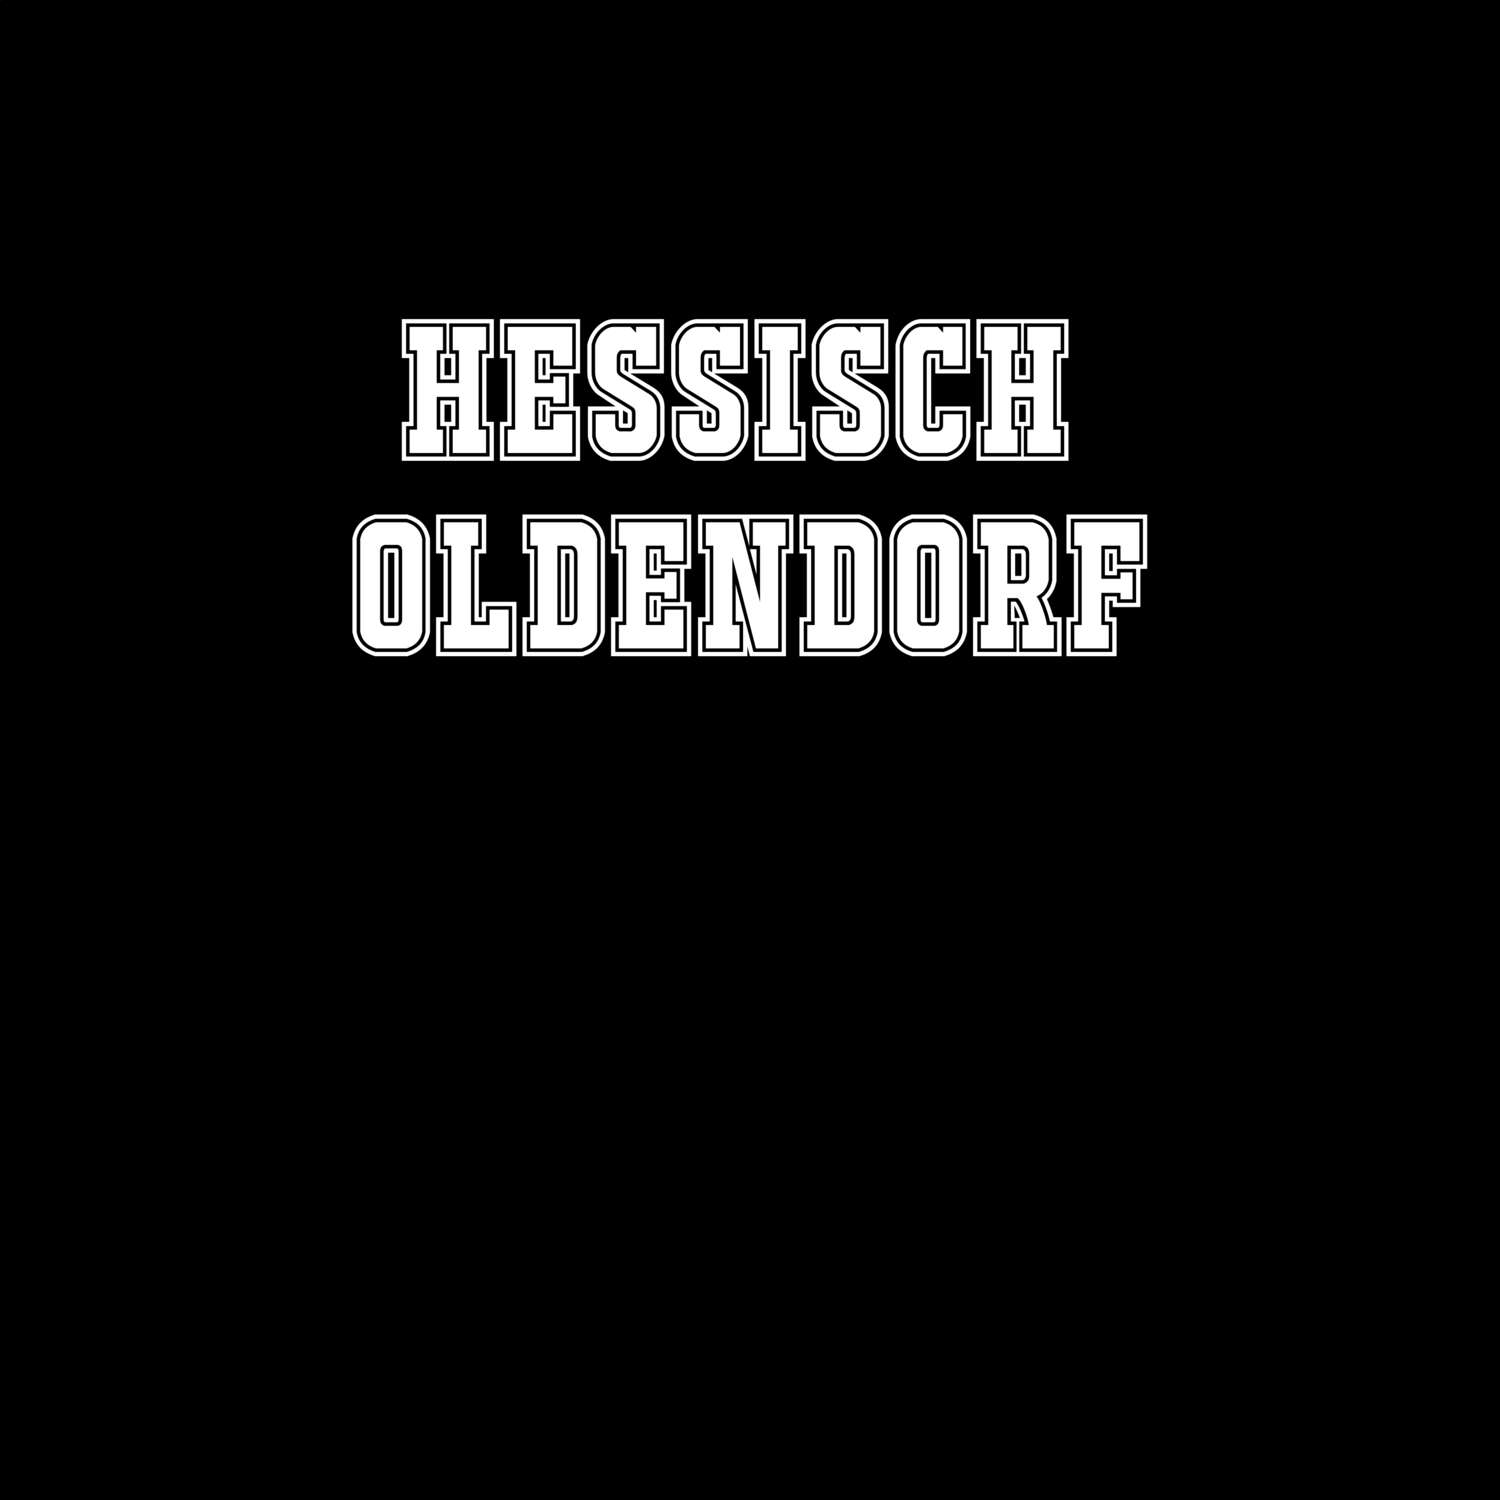 Hessisch Oldendorf T-Shirt »Classic«